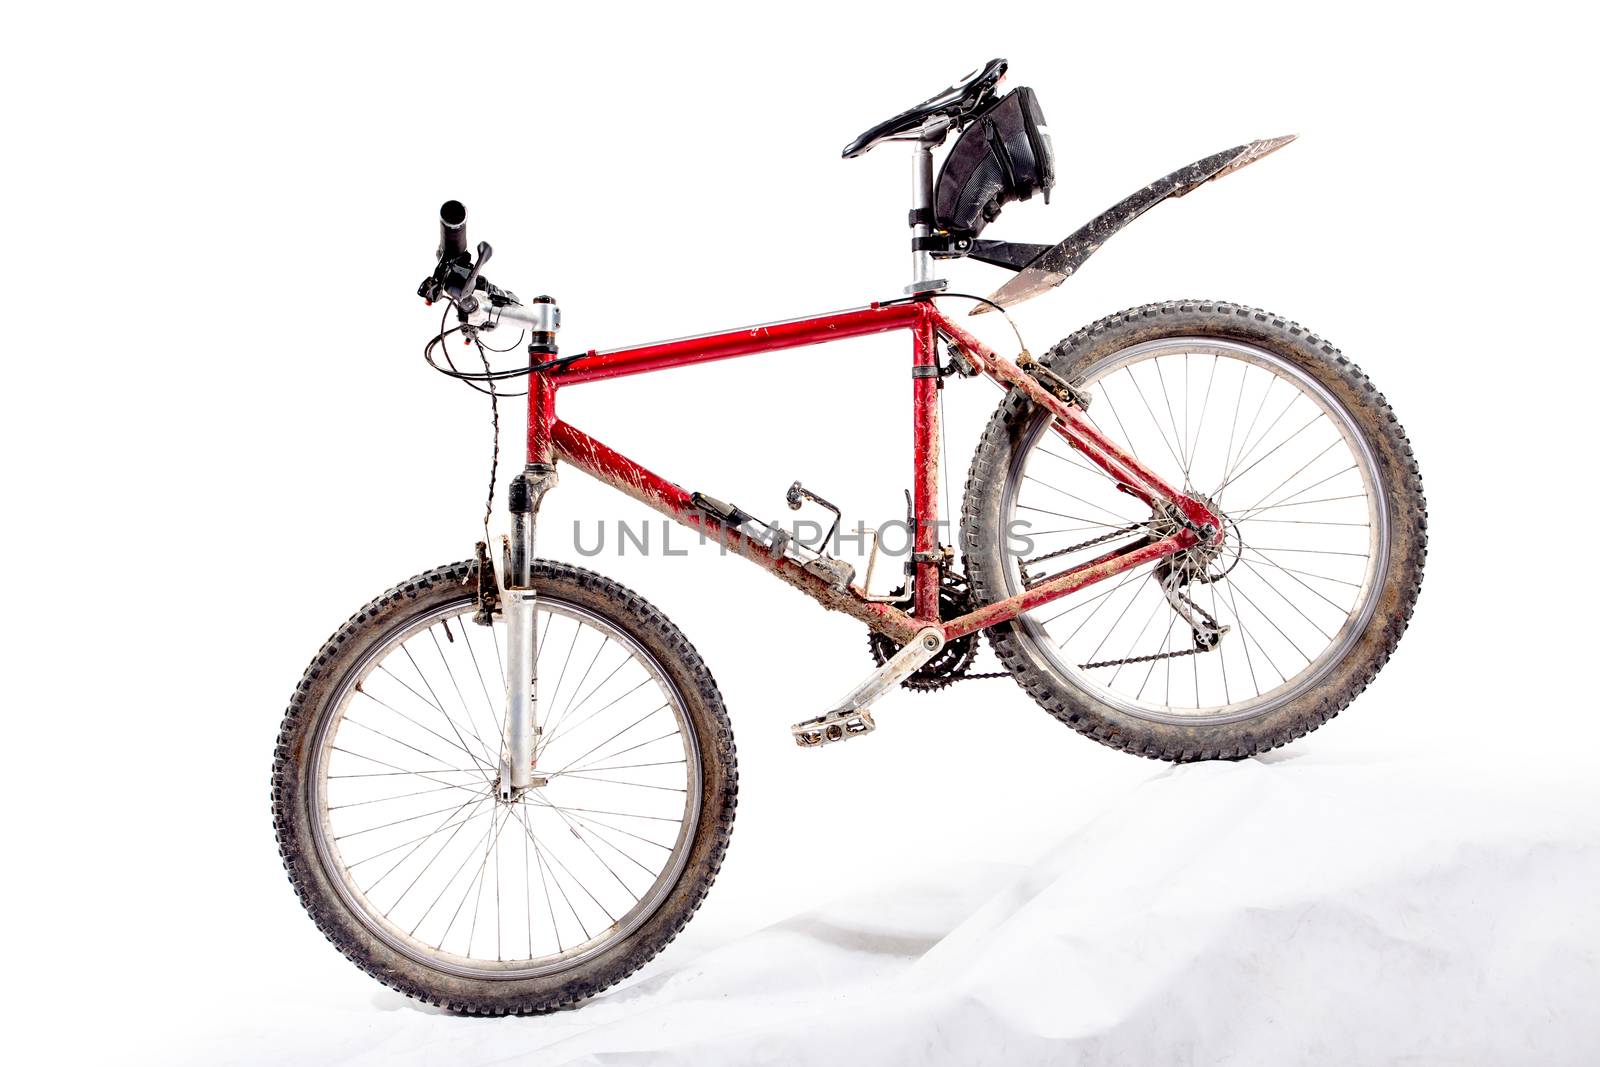 muddy mountain bike by kokimk